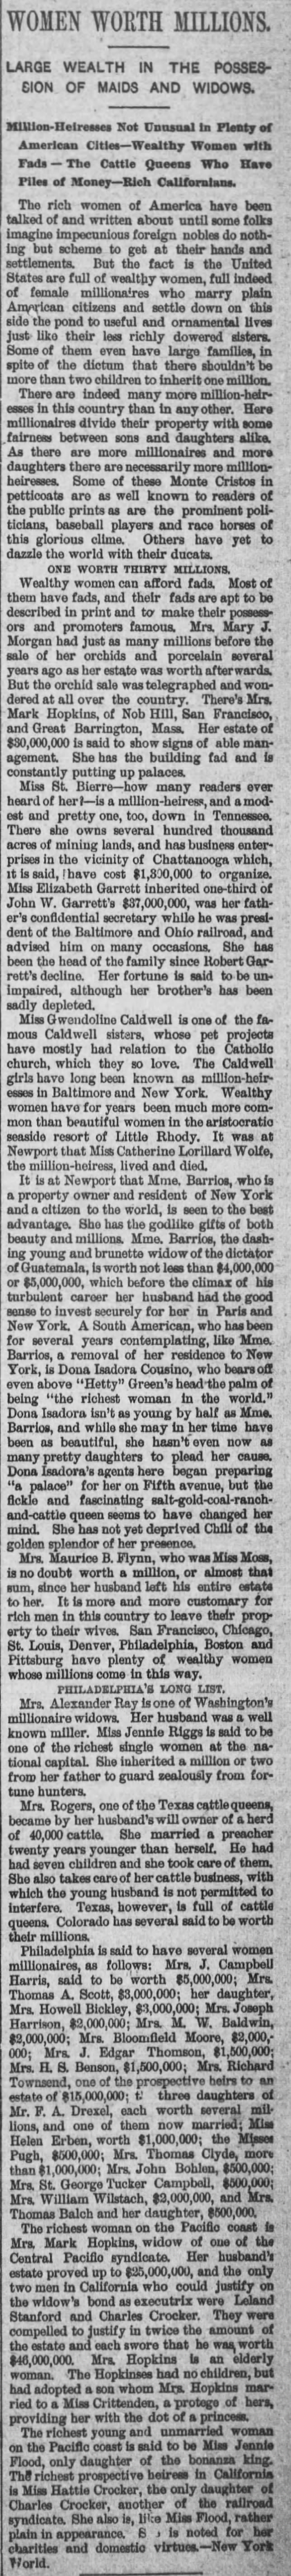 Women Worth Millions. The Newton Daily Republican (Newton, Kansas) 15 August 1889, p 1